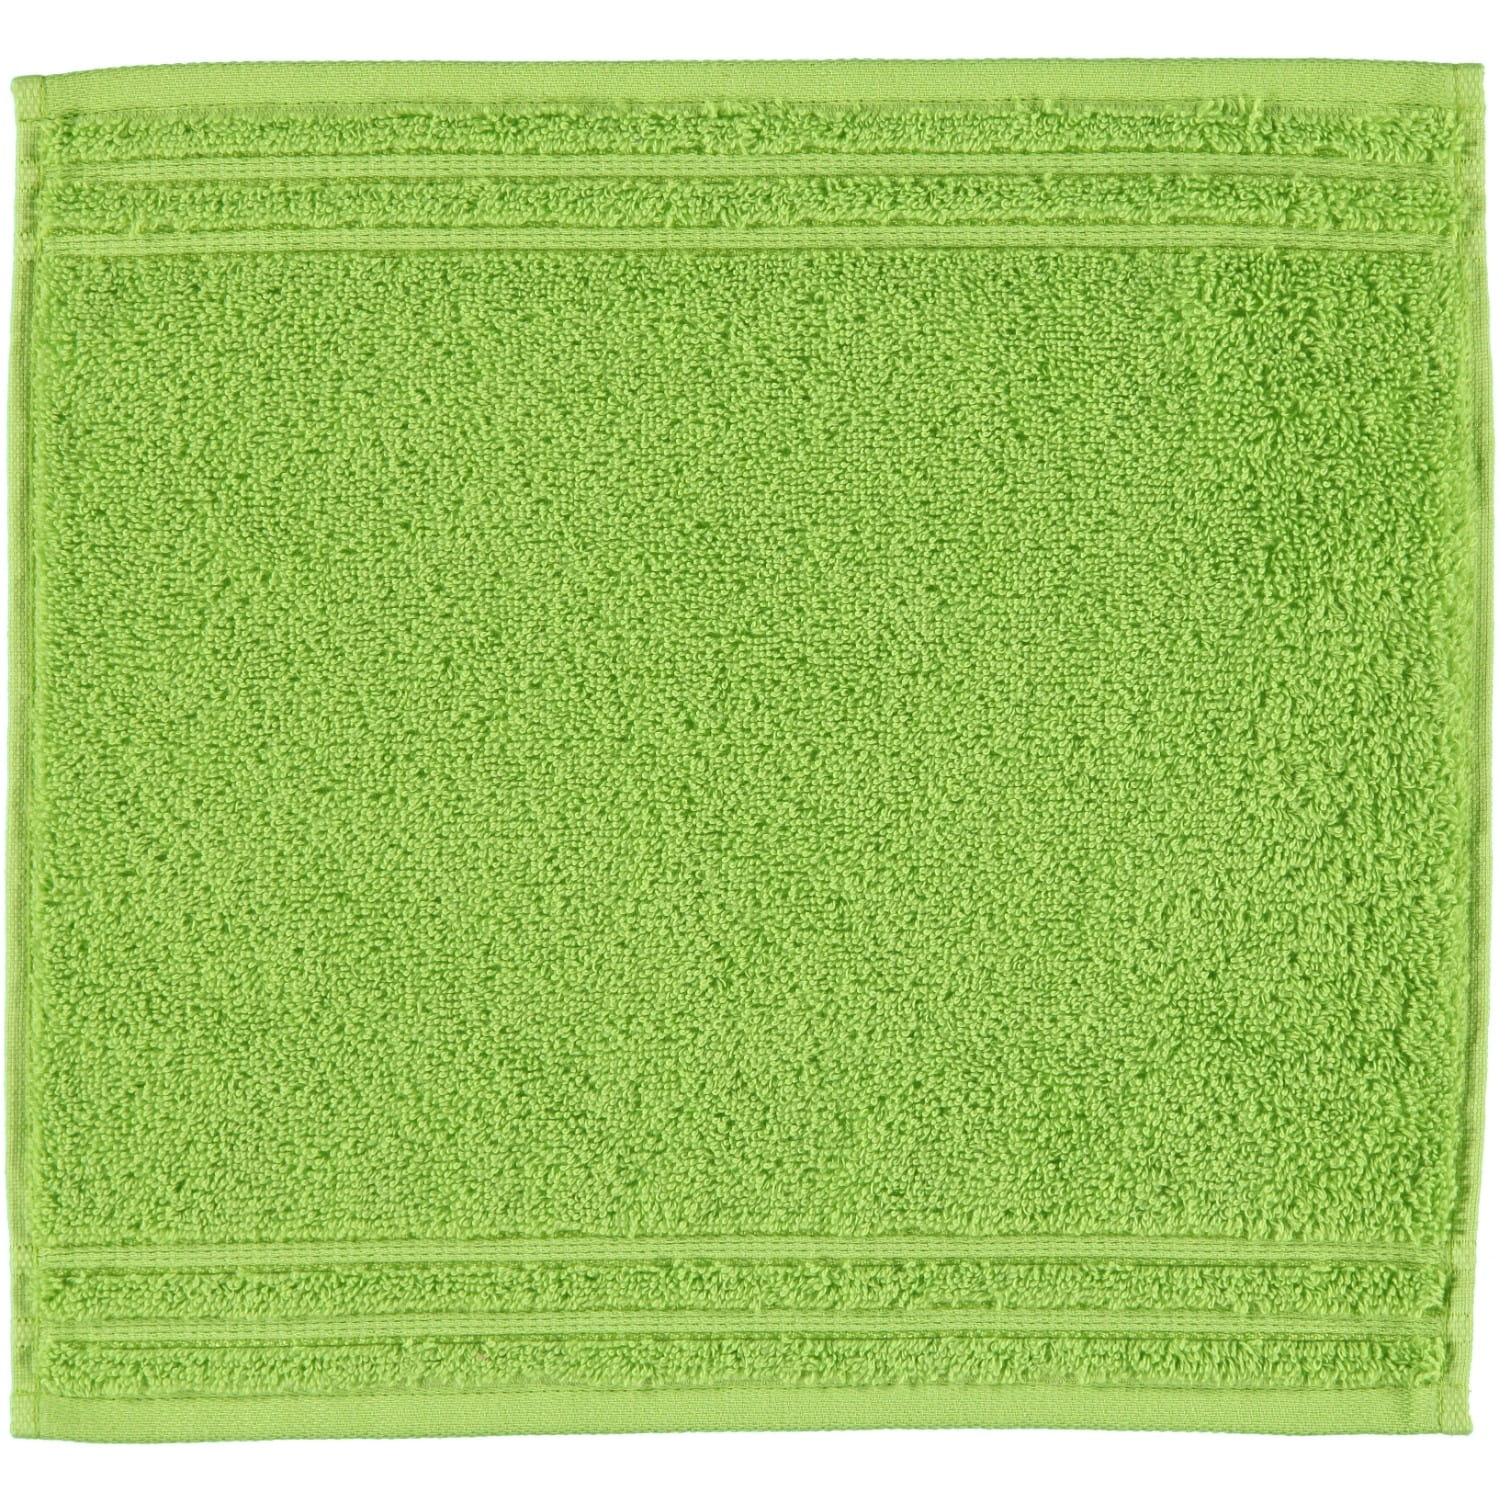 Marken meadowgreen Vossen Handtücher Handtücher Farbe: Feeling 530 | - Vossen Calypso | Vossen | -